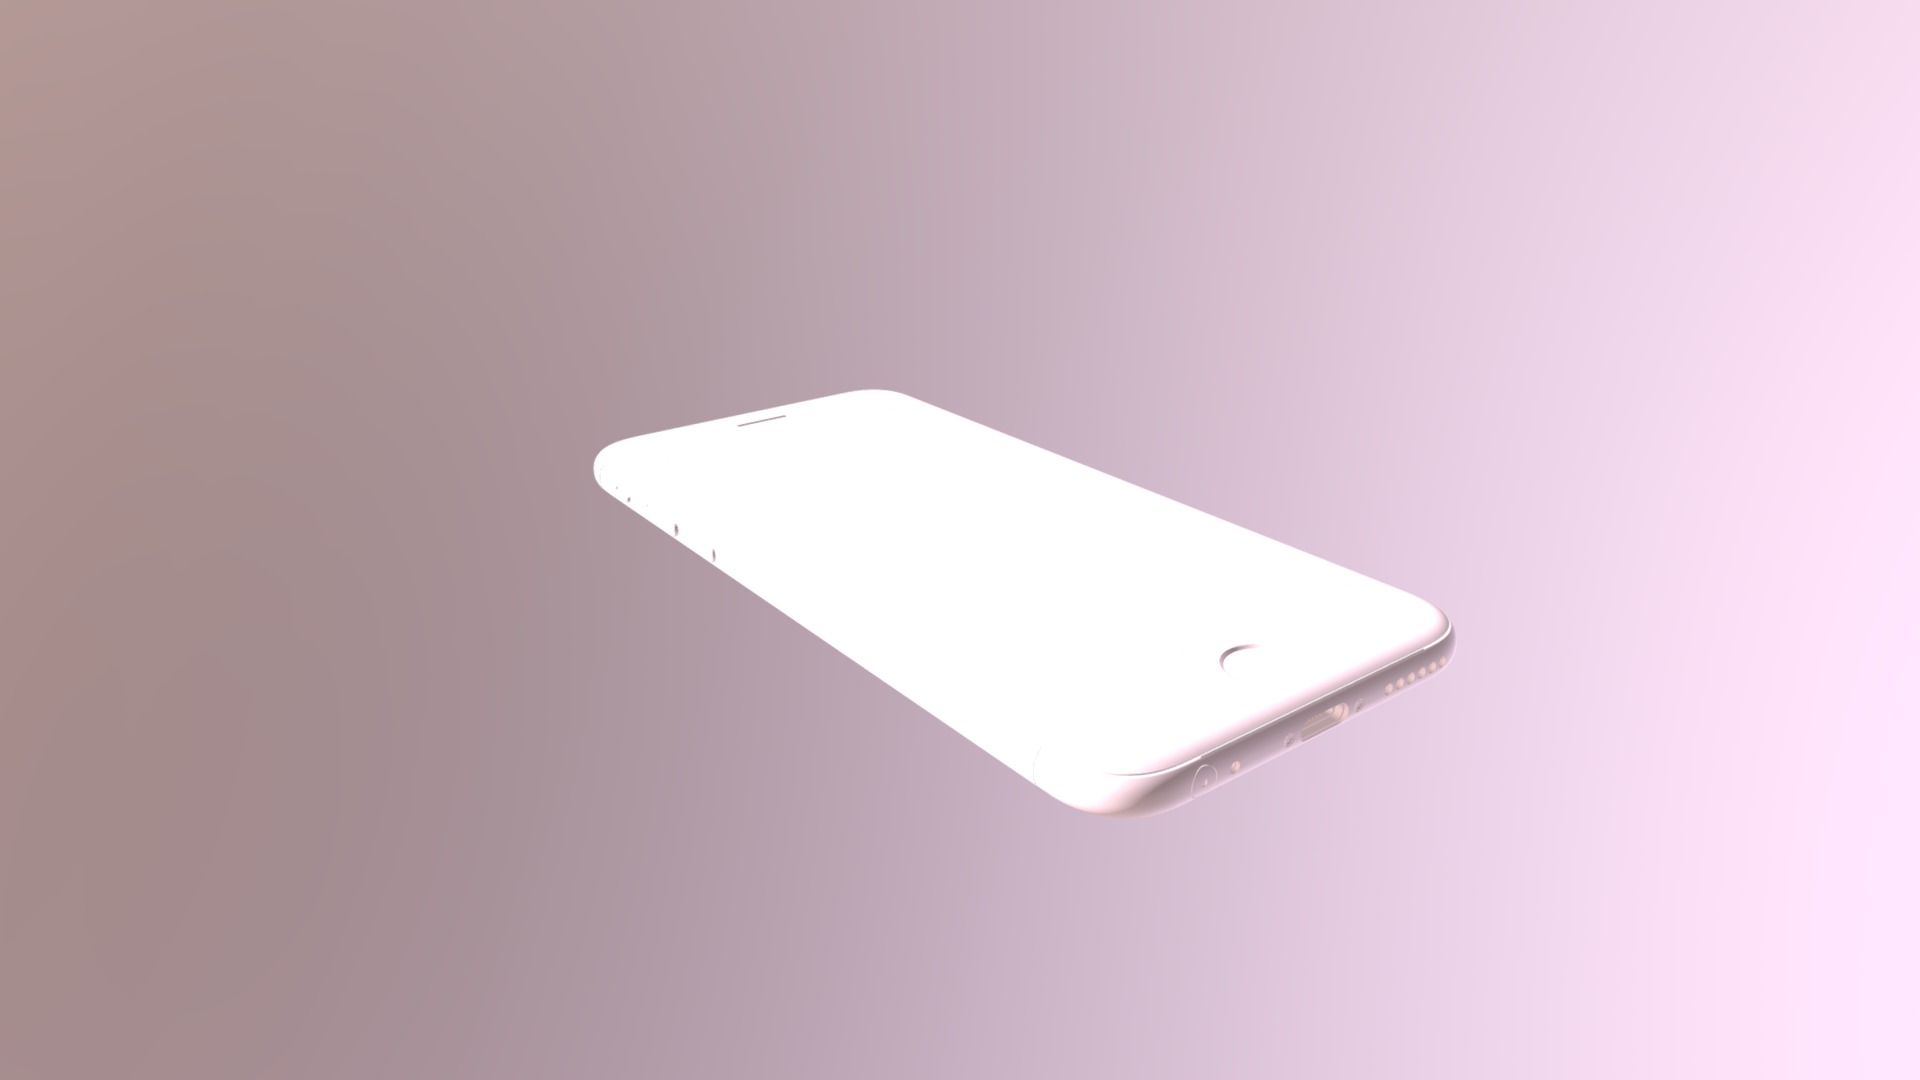 3D model iPhone 6s – original Apple dimensions - This is a 3D model of the iPhone 6s - original Apple dimensions. The 3D model is about a white rectangular device.